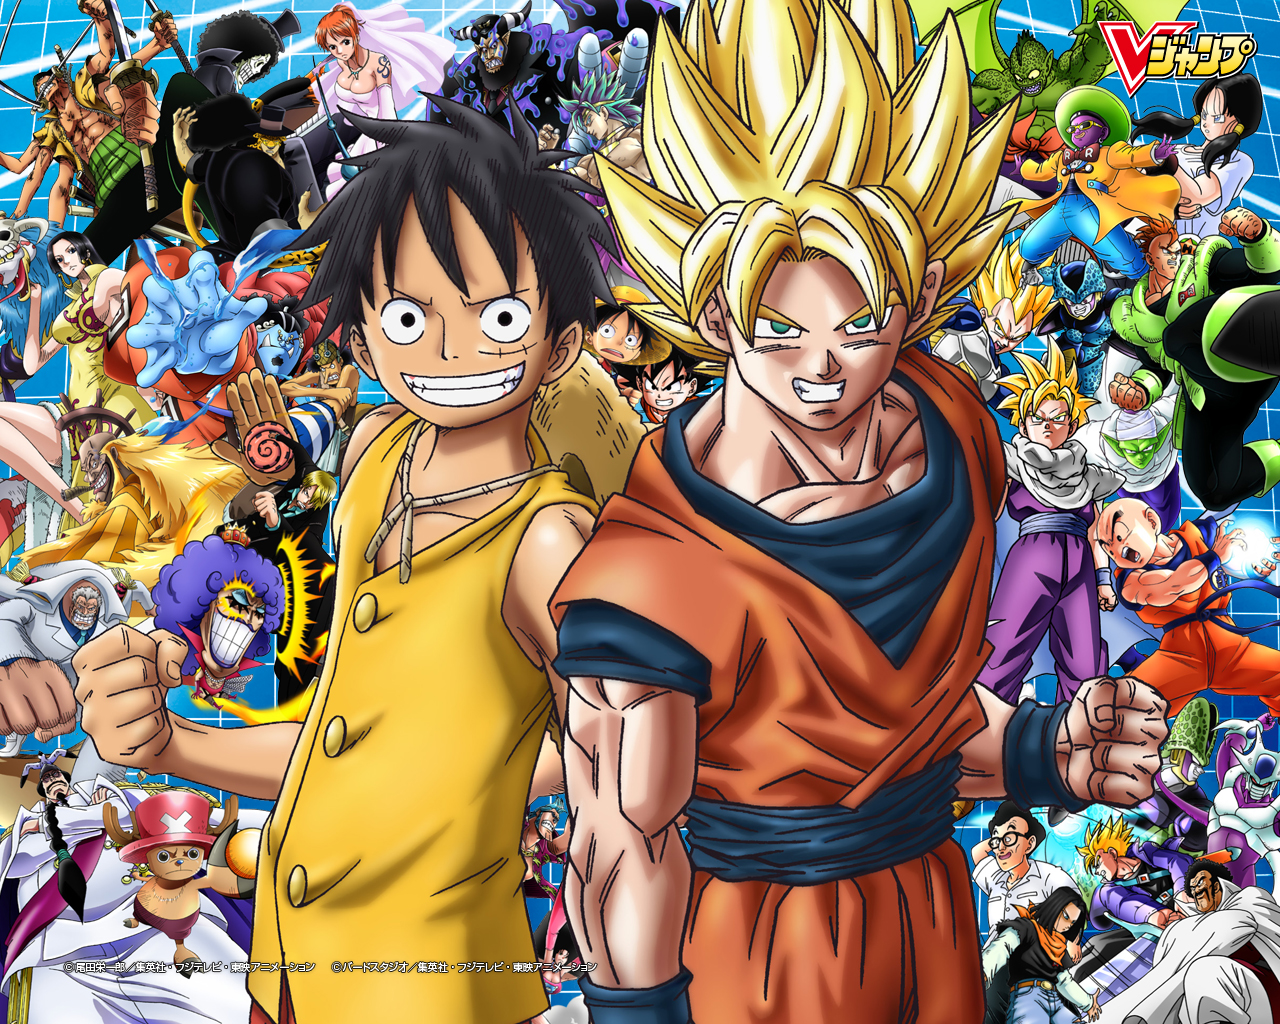 shaolanXD.com: Dragon Ball Z, One Piece et Naruto en fonds d'écran officiels